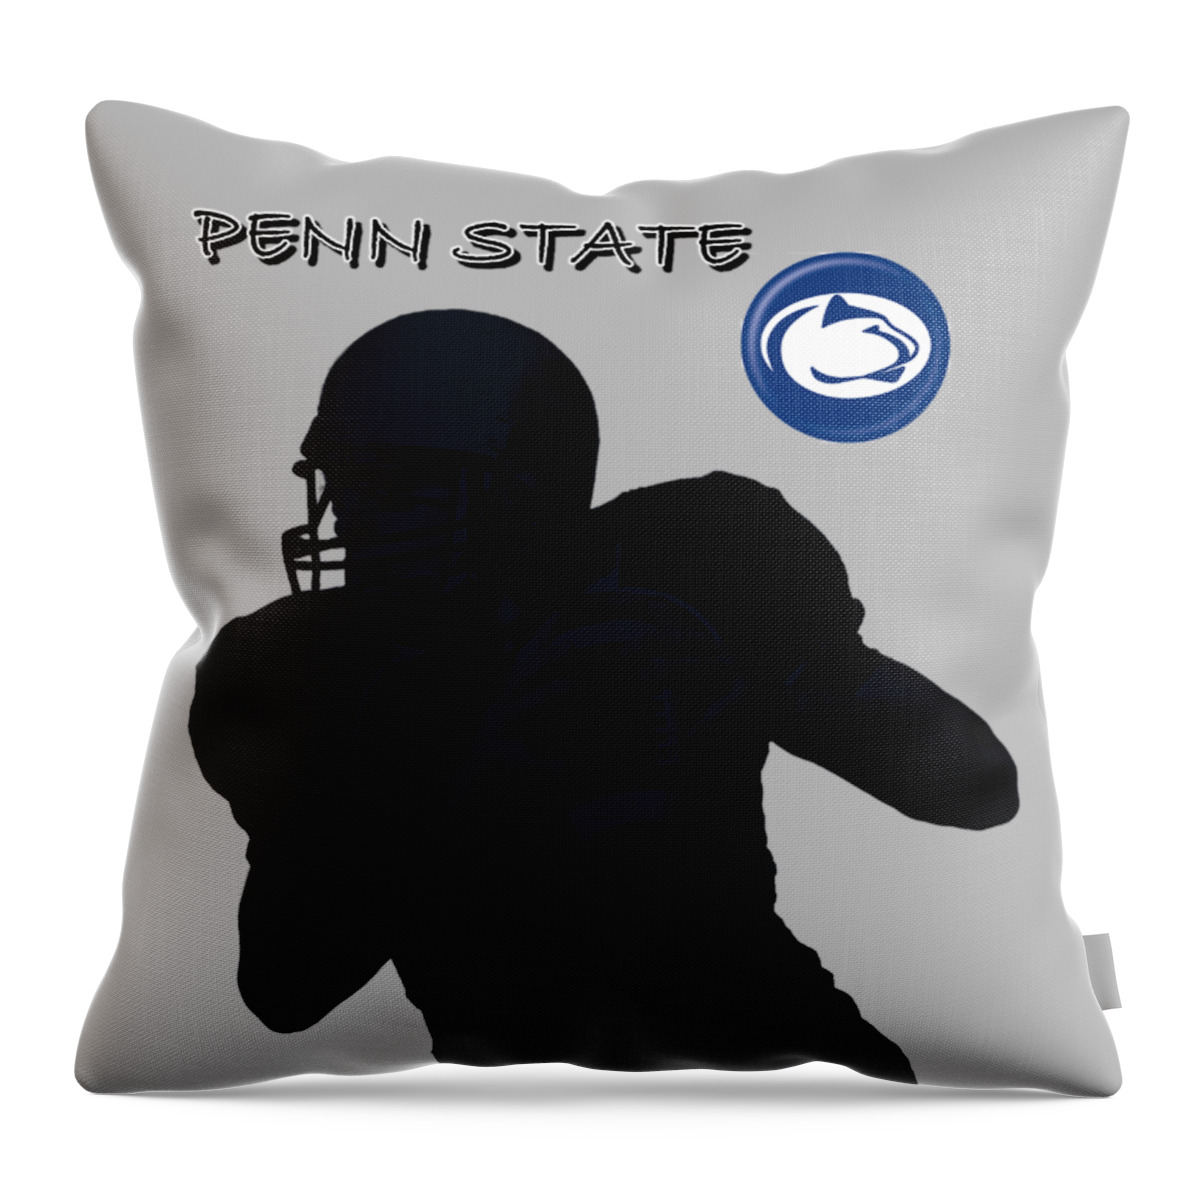 Football Throw Pillow featuring the digital art Penn State Football by David Dehner